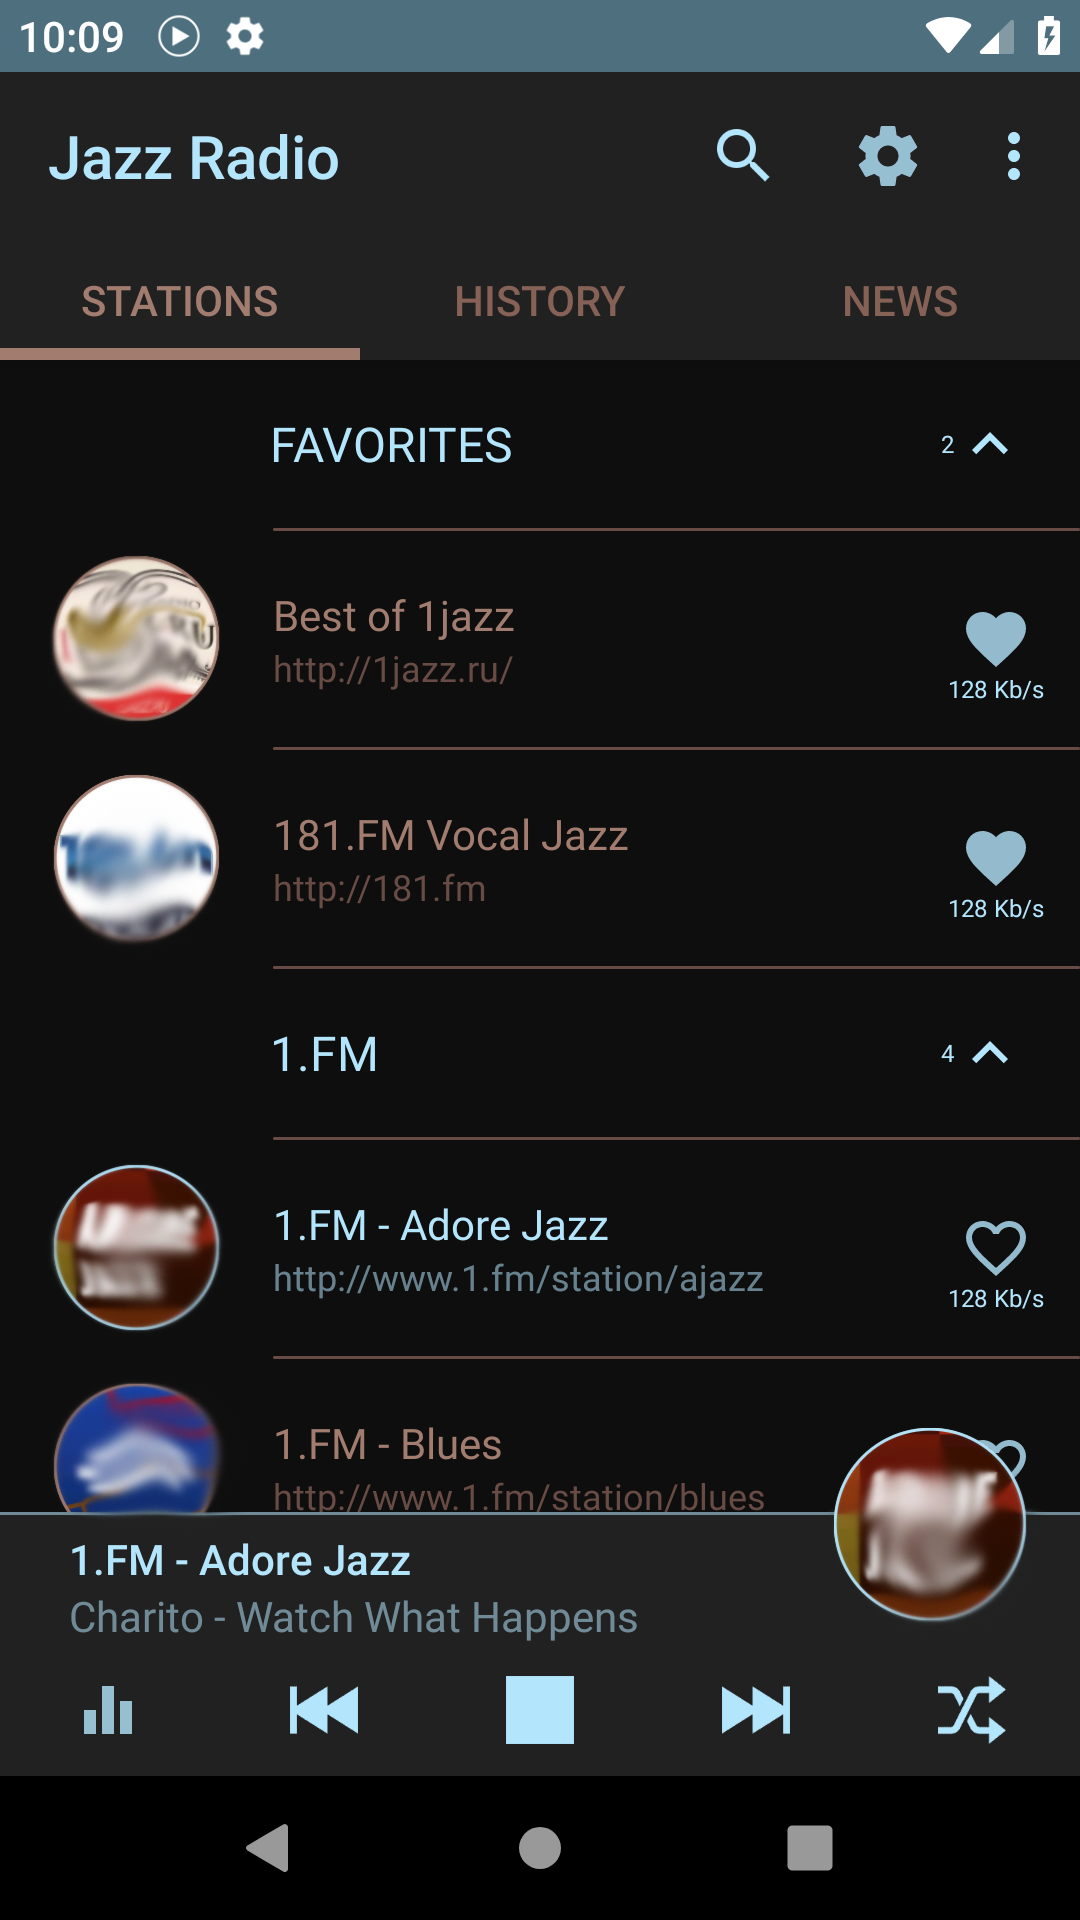 Jazz & Blues Music Radio APK 4.15.0 for Android – Download Jazz & Blues  Music Radio APK Latest Version from APKFab.com